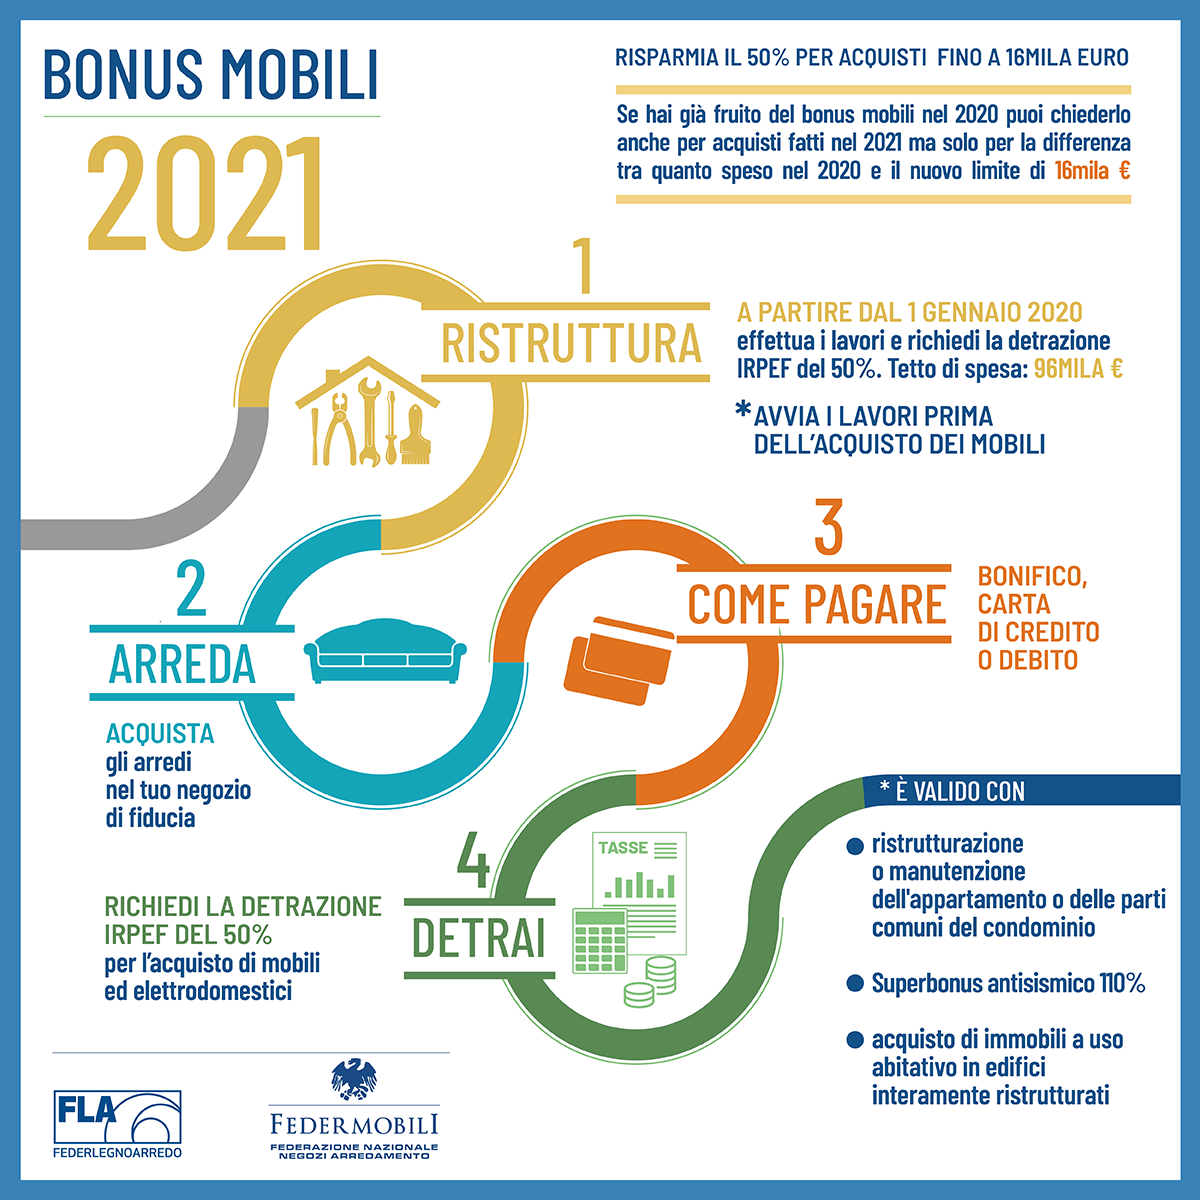 Bonus mobili 2021: Federmobili e Assarredo insieme per promuovere gli incentivi